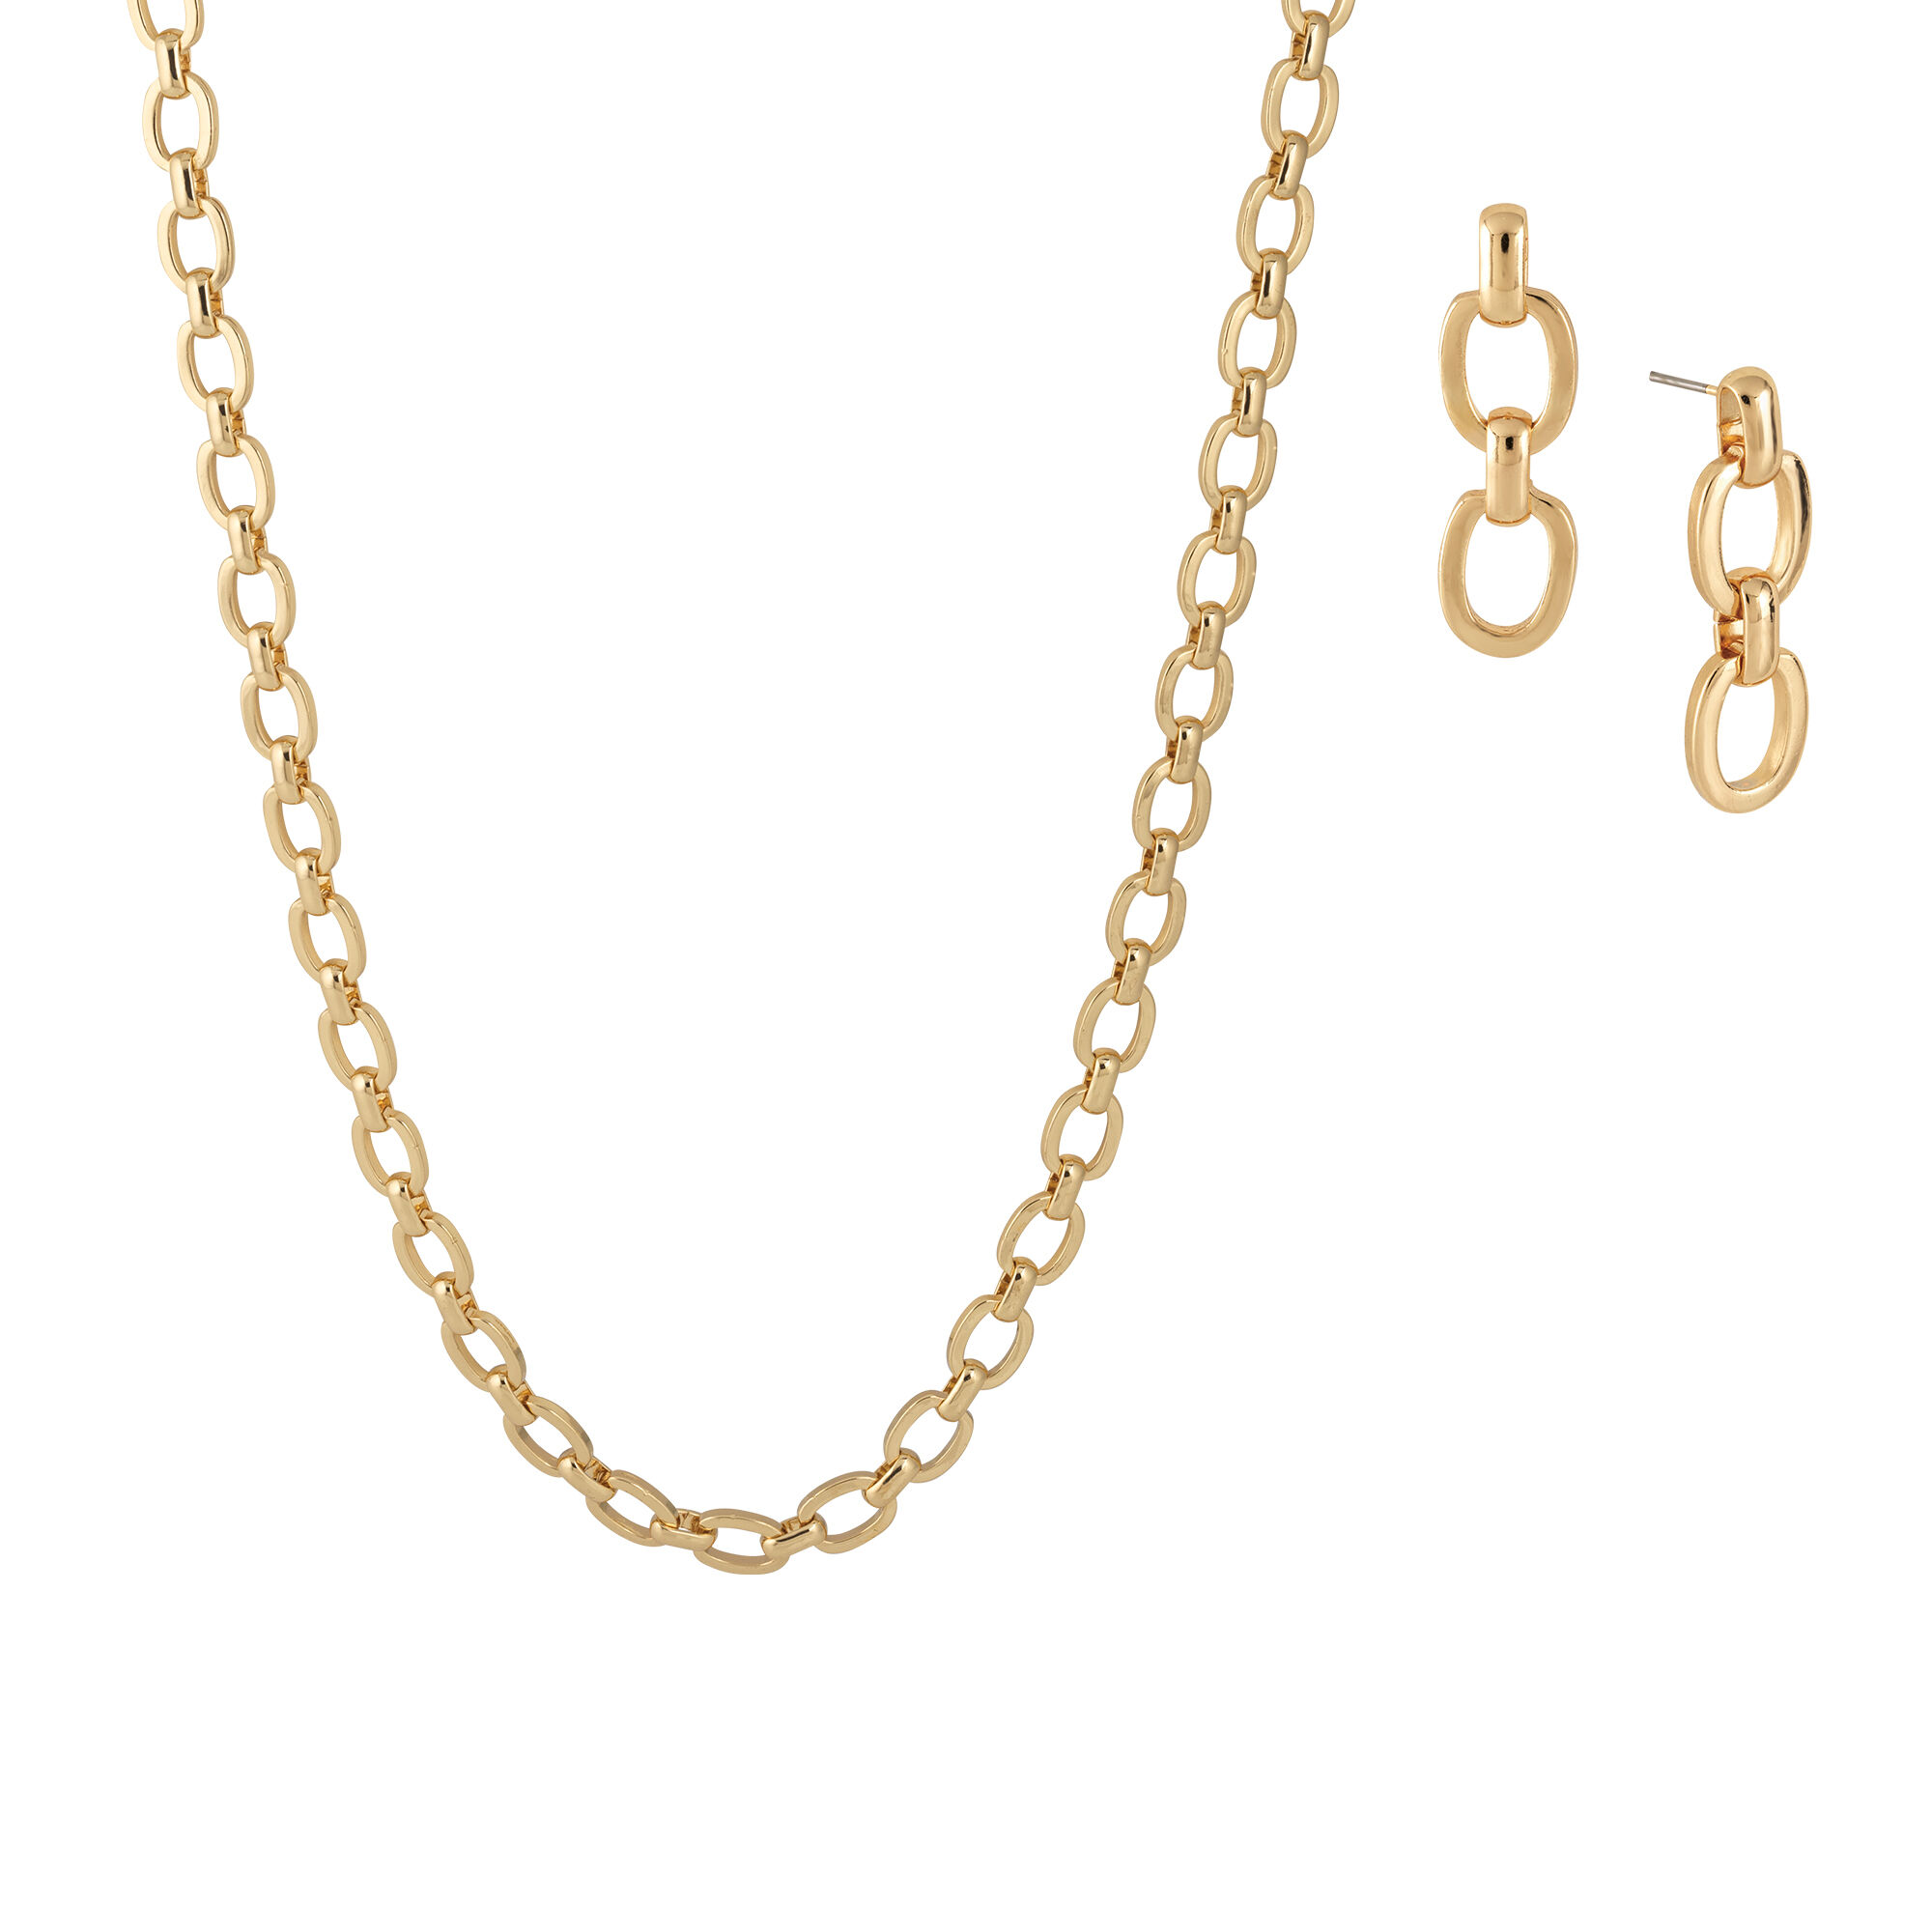 Golden Glow Triple Neck Ear Collection 10580 0015 c necklace